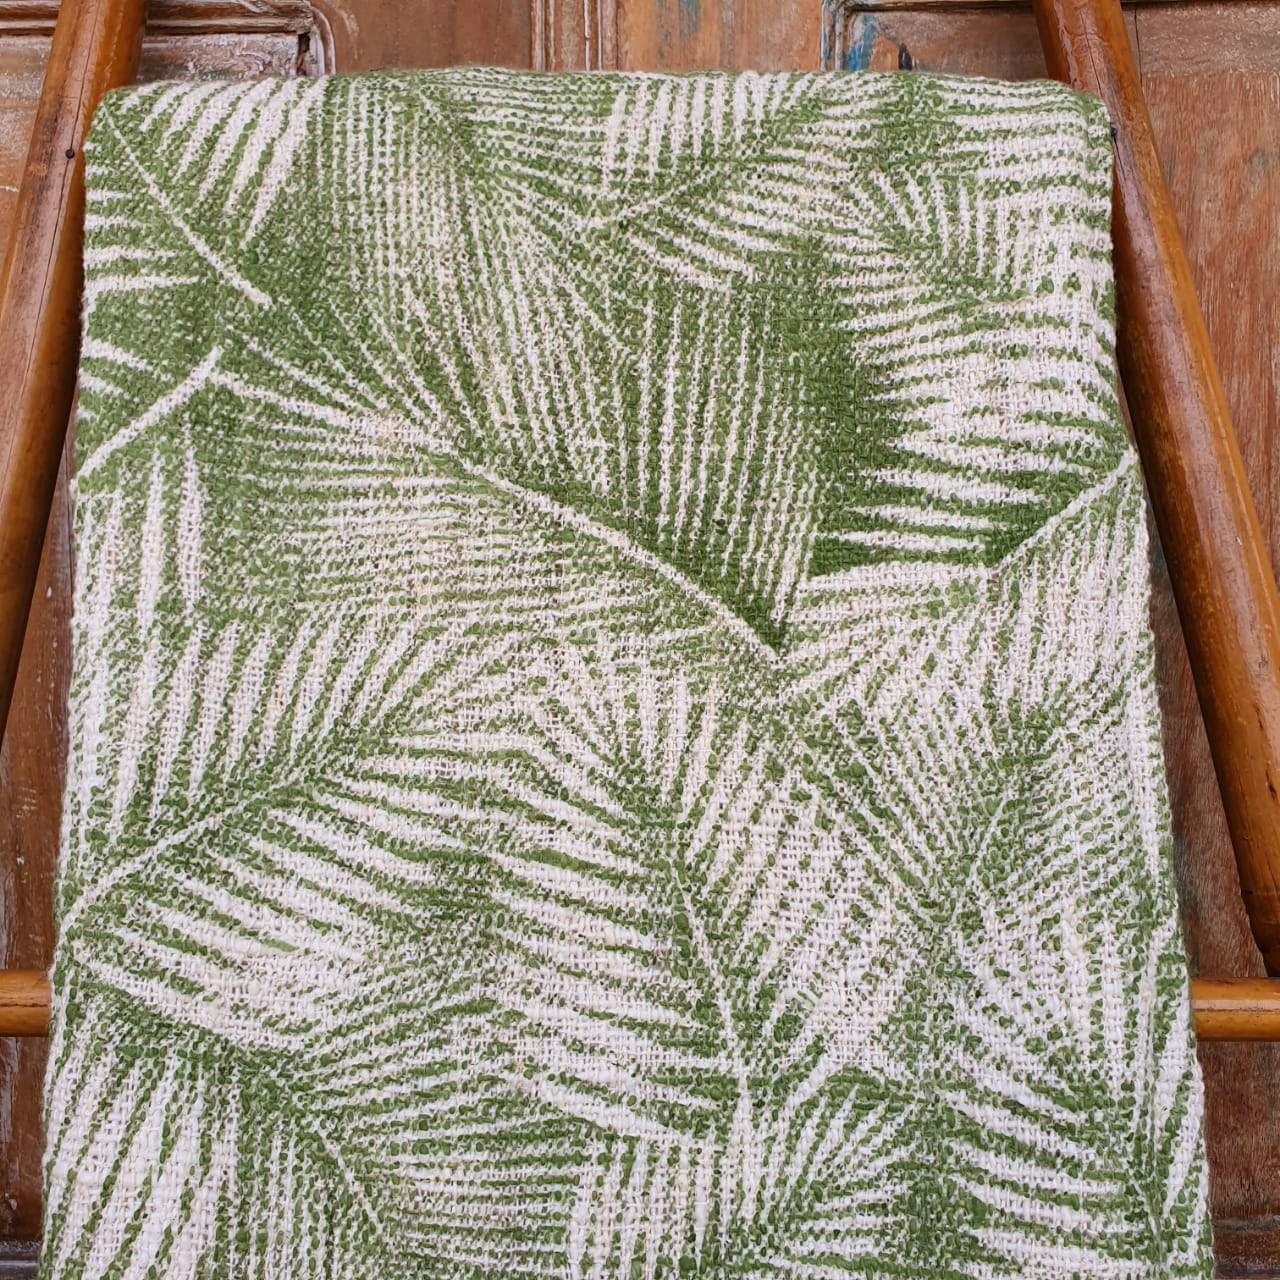 Tropical Palm Vintage Leaf Print Throw with Tassels - bohemian-beach-house